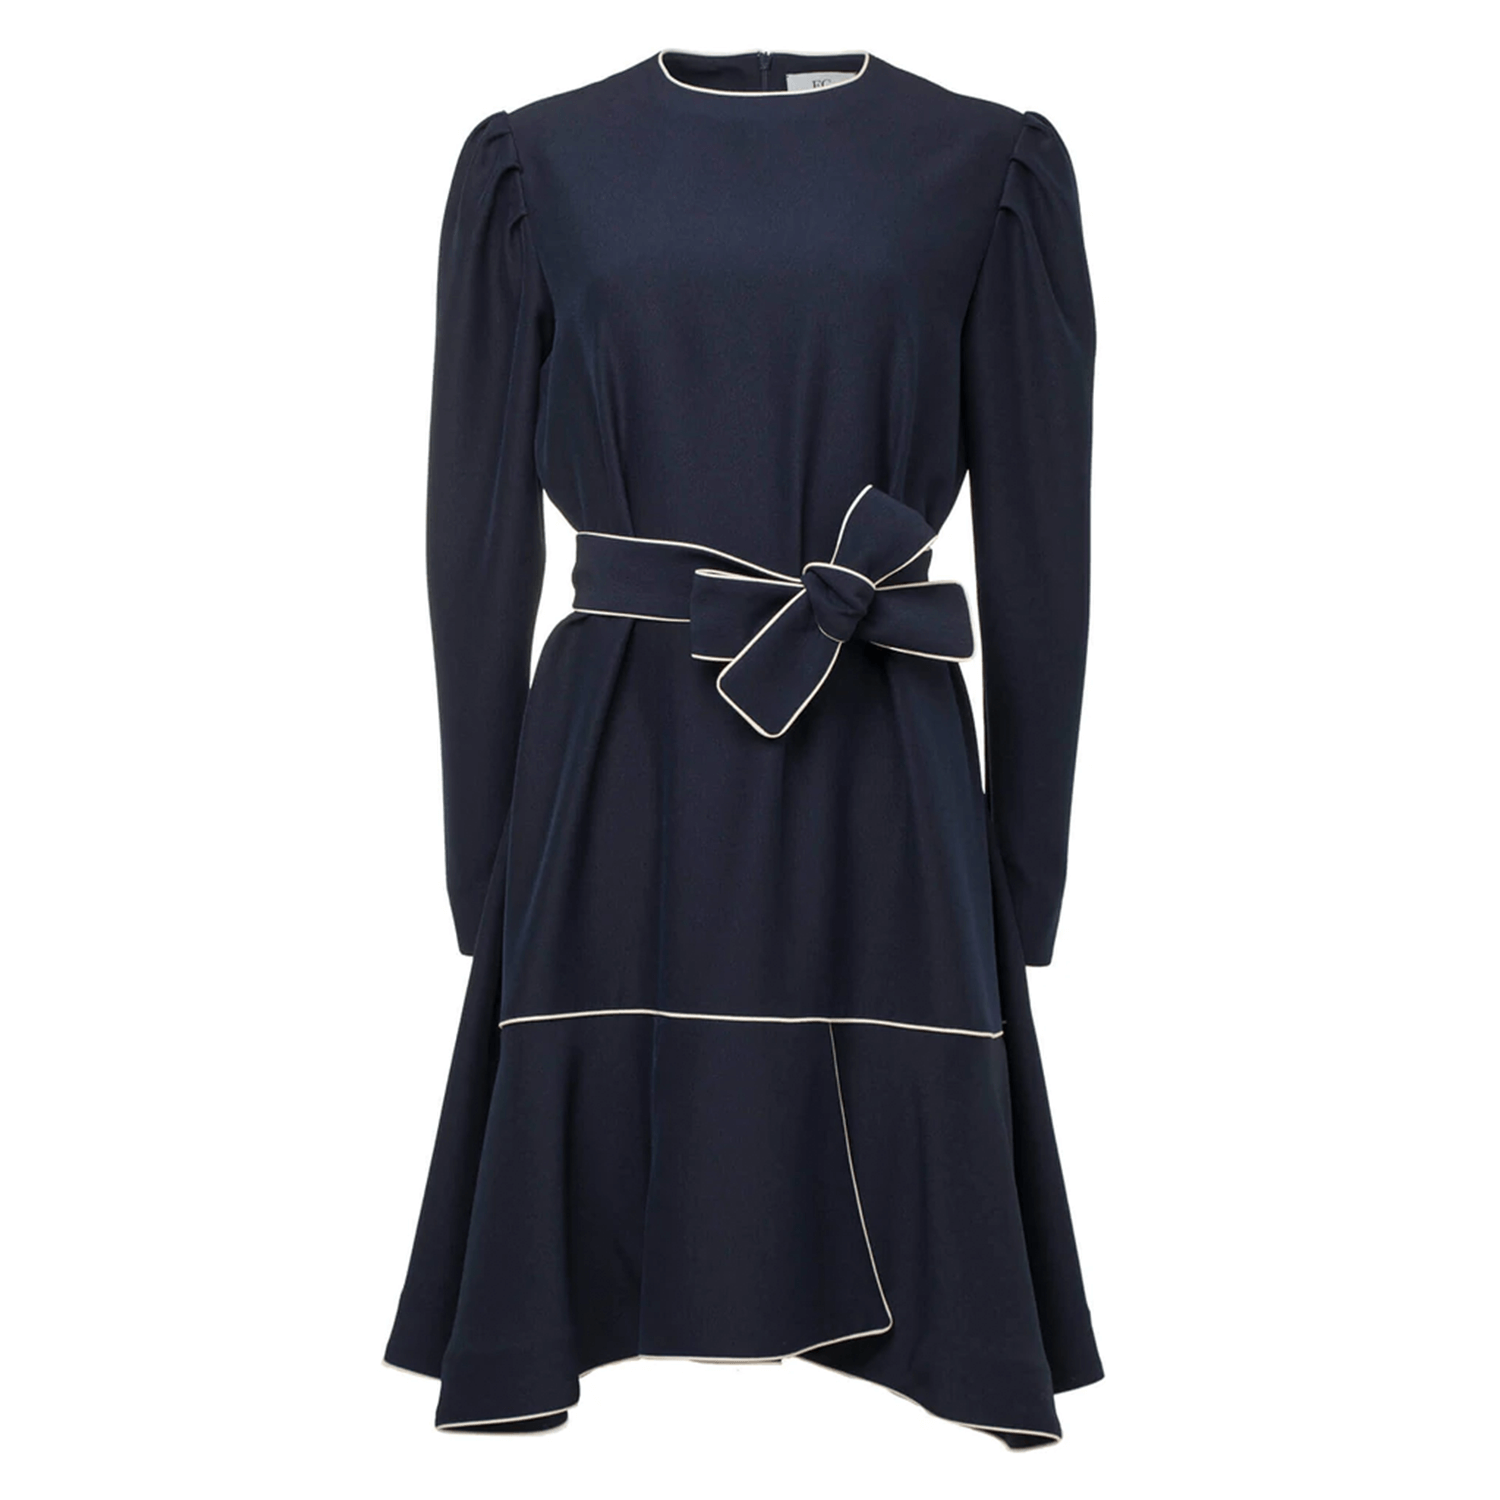 Royal blue crepe loose silhouette dress